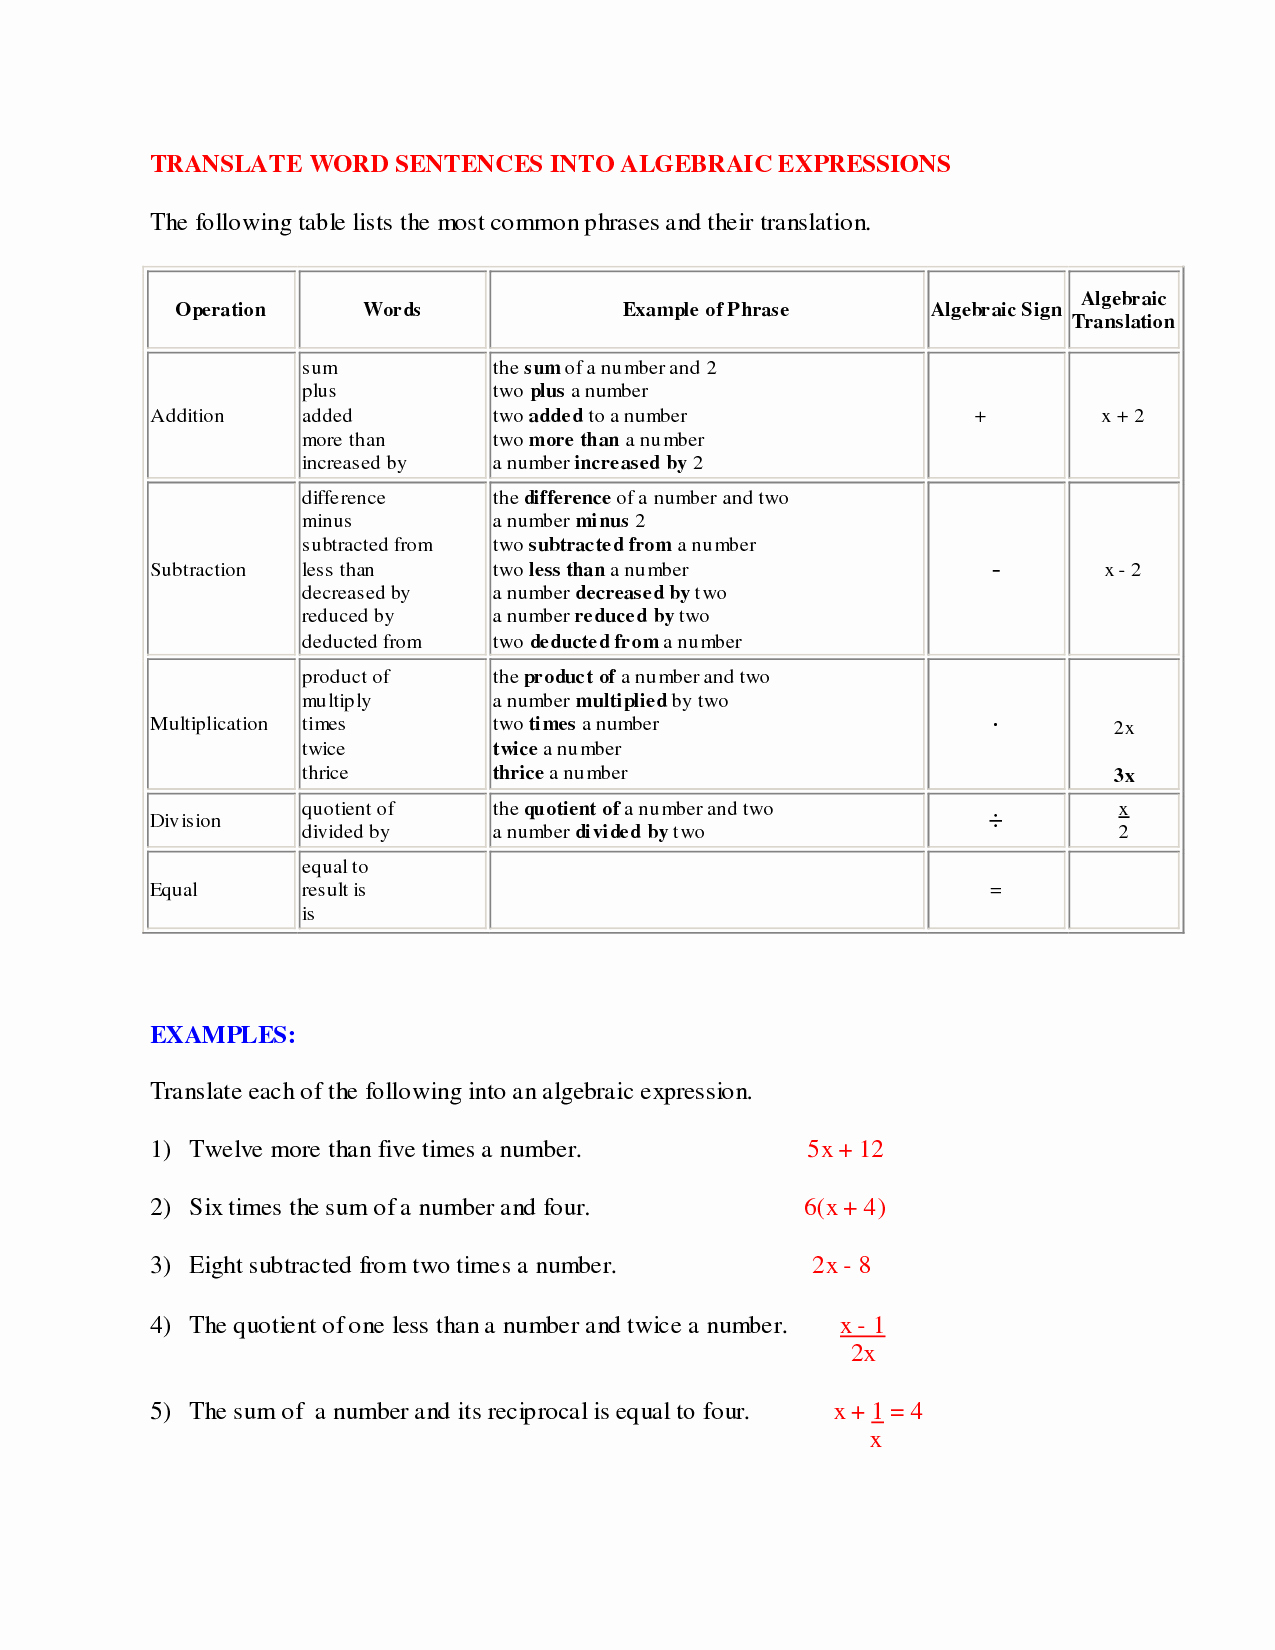 Translating Algebraic Expressions Worksheet Awesome 6 Best Of Translating Expressions and Equations